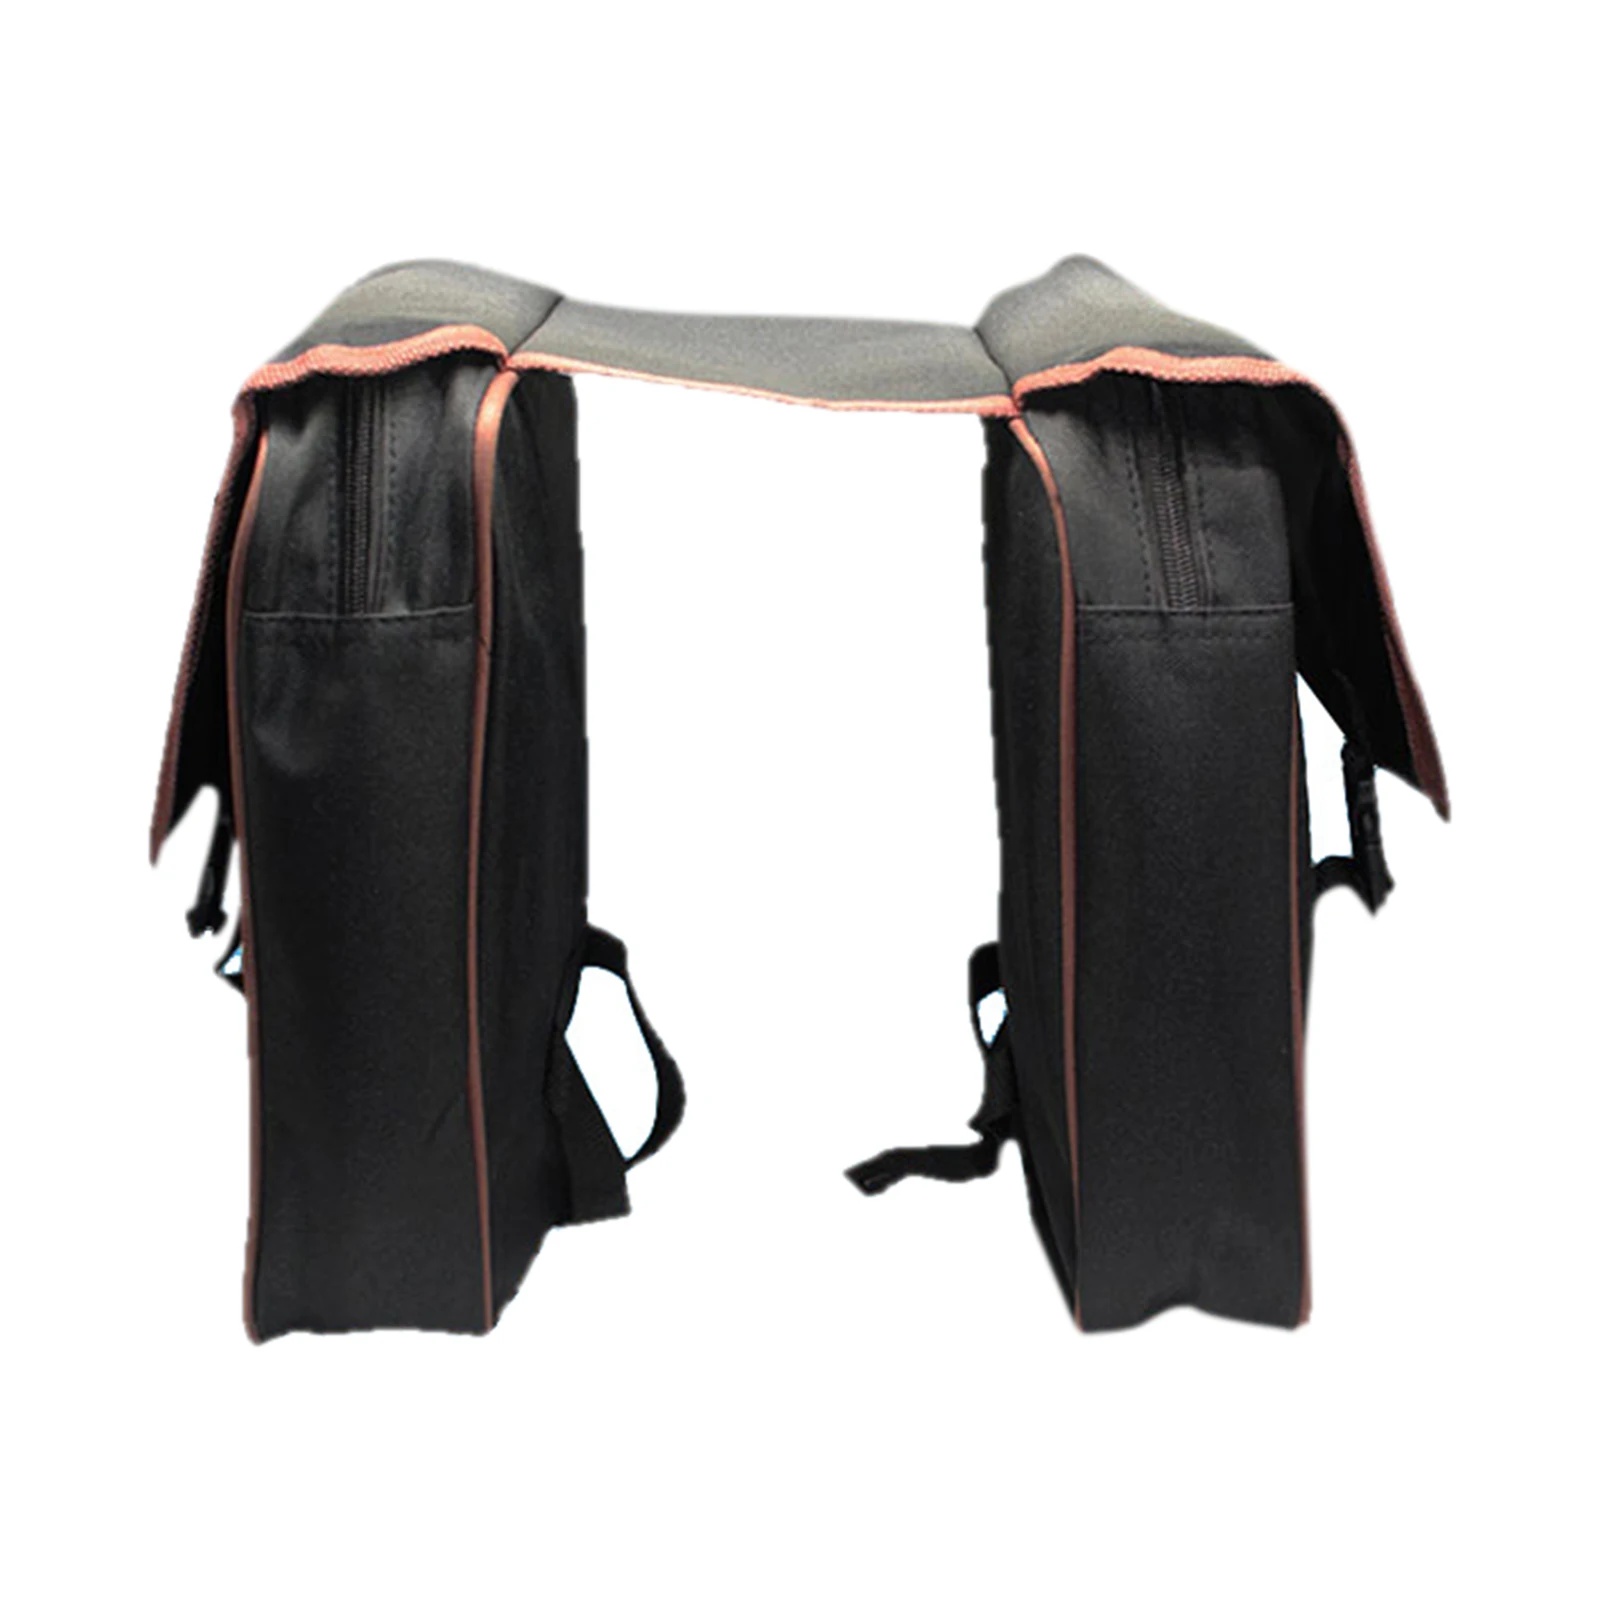 Water-Resistant Portable Bike Pannier Bag Bicycle Panniers, Bike Rear Seat Saddle Bags